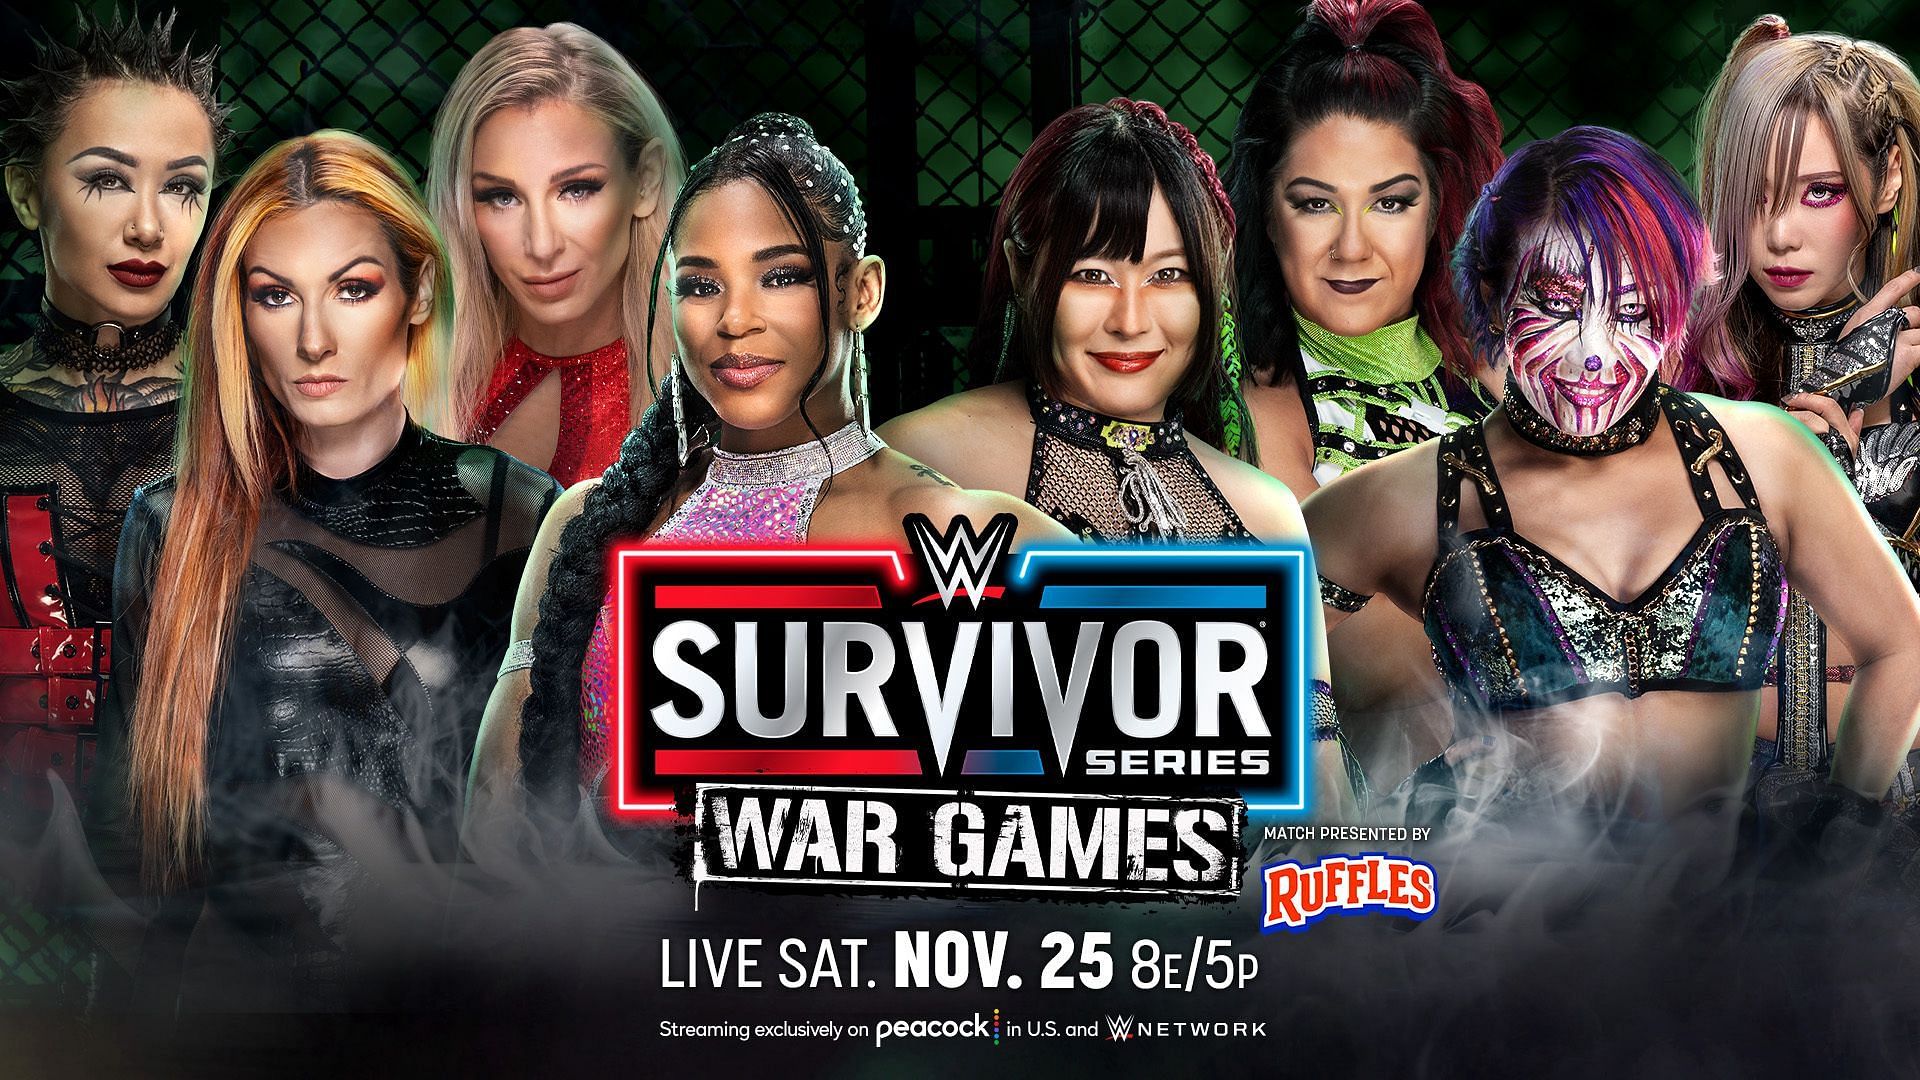 Damage CTRL will battle inside a cage at WWE Survivor Series WarGames